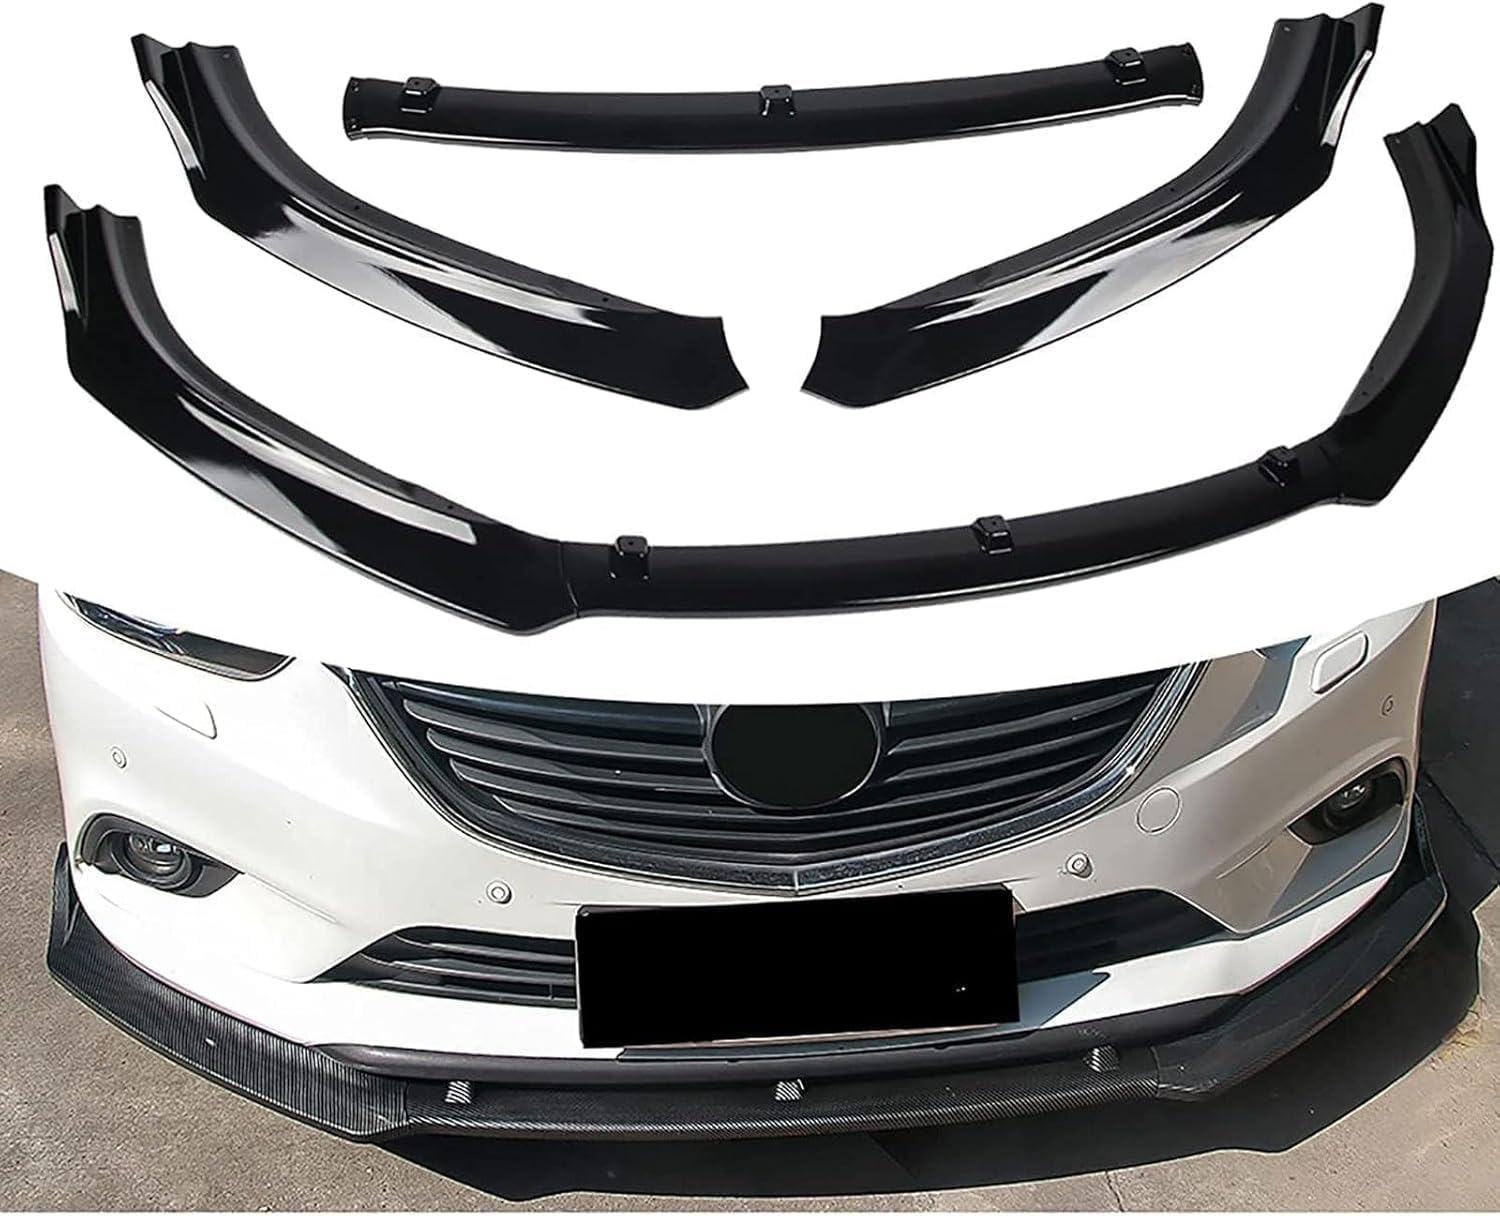 Auto Frontspoiler für Mazda 6 Atenza 2014 2015 2016 2017 2018, Frontstoßstange Kinnsplitter Lippe/Universal Frontsplitter/Auto Frontlippe von GuanLL